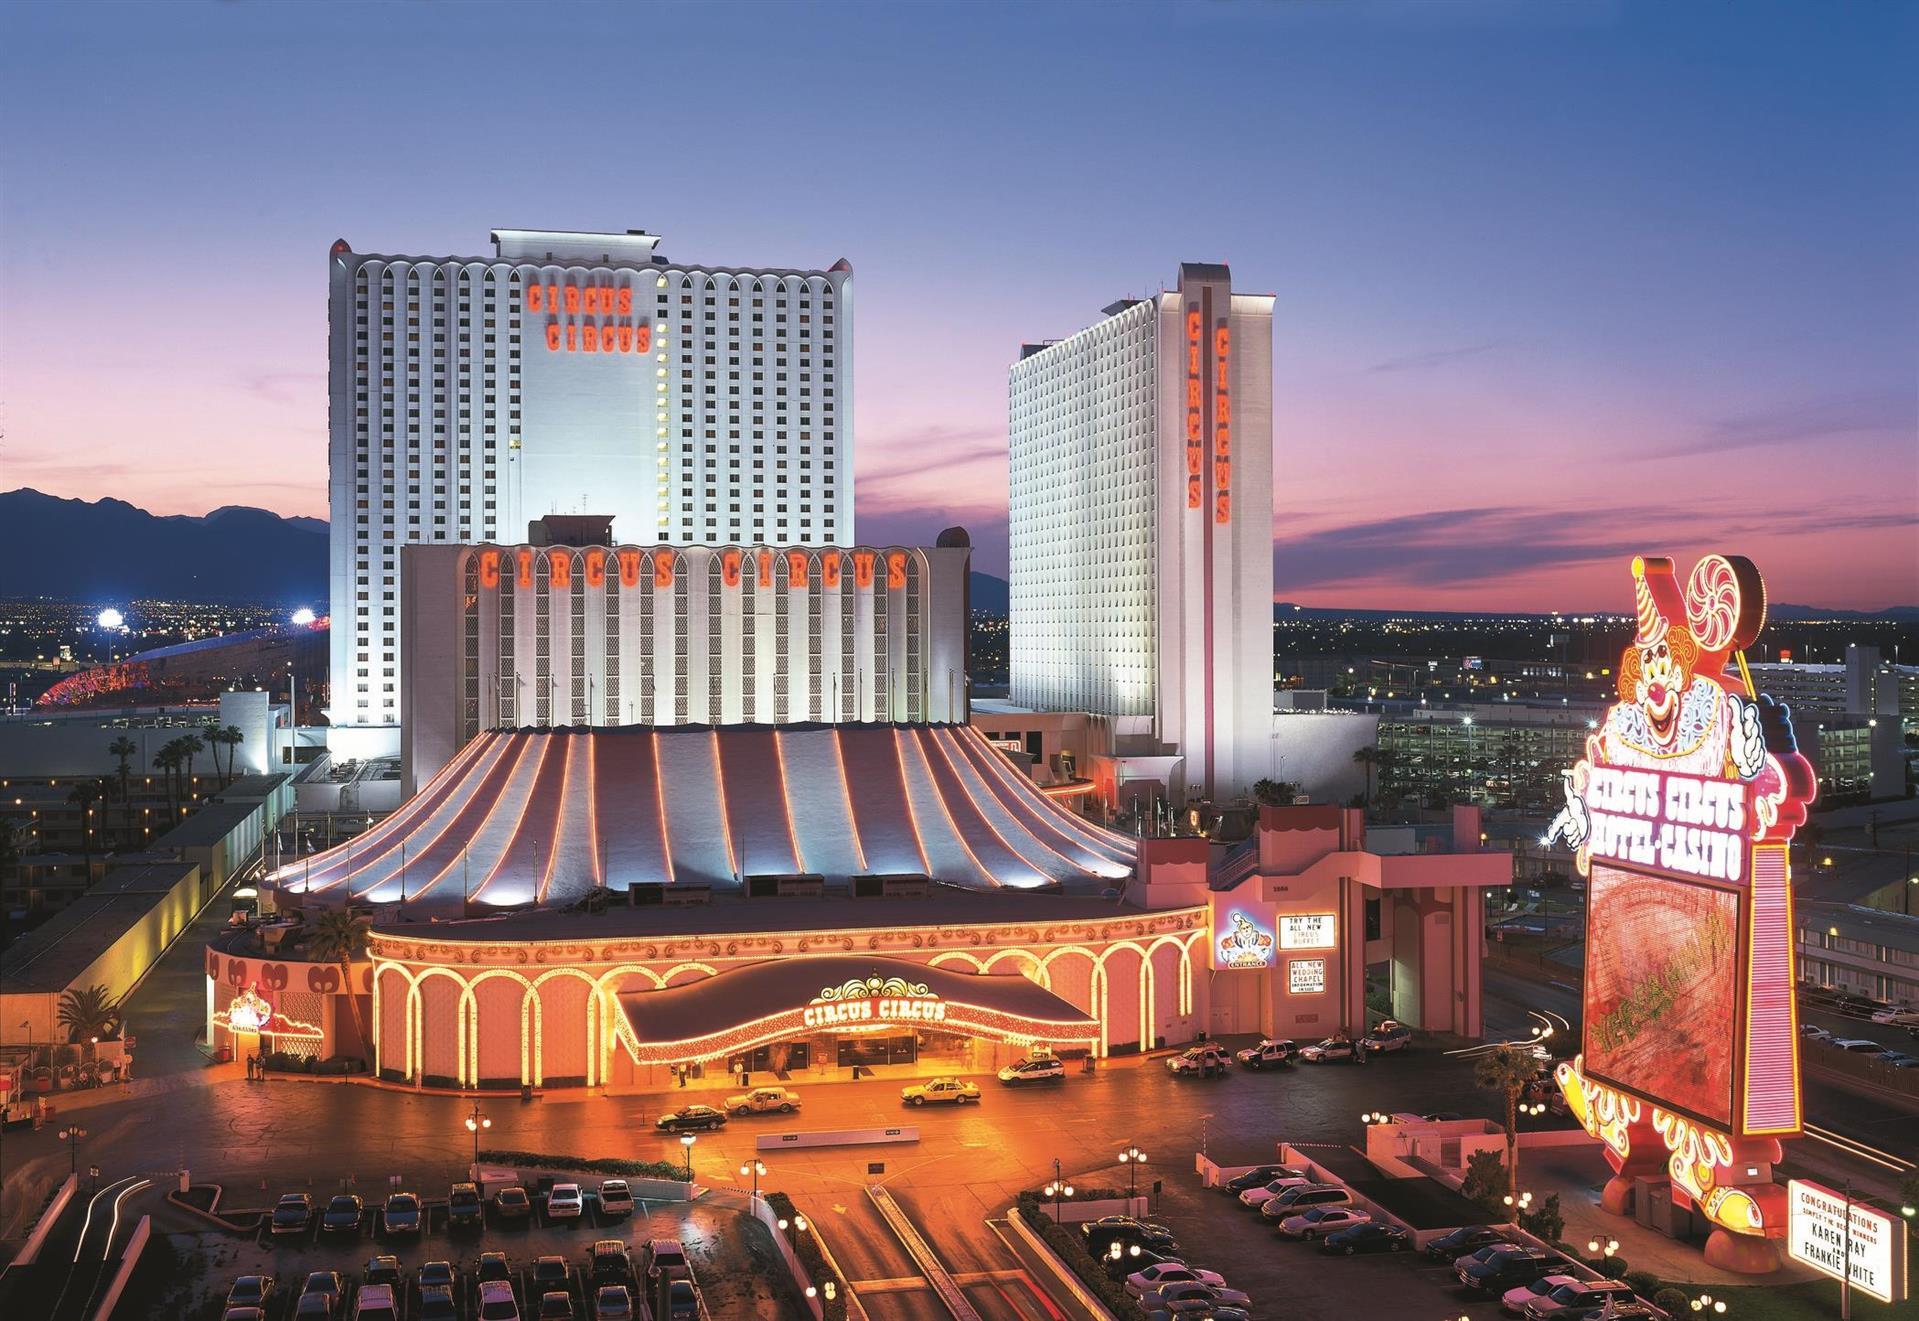 Circus Circus Hotel in Las Vegas, NV